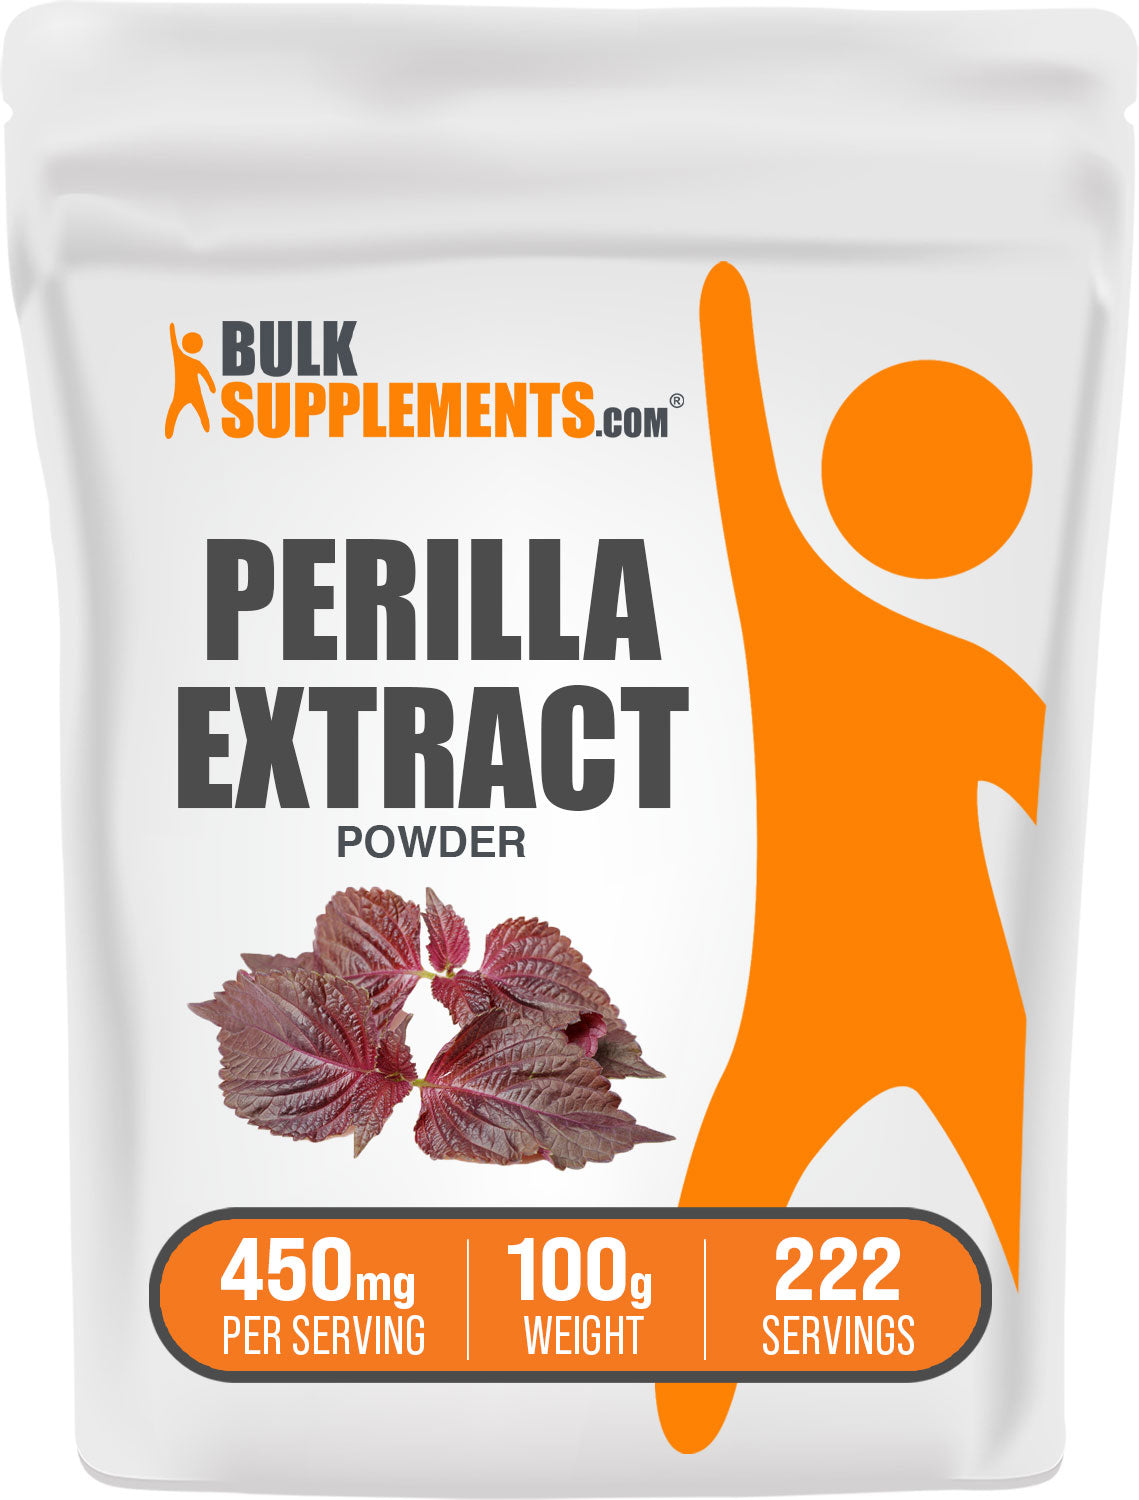 Perilla Extract 100g Bag